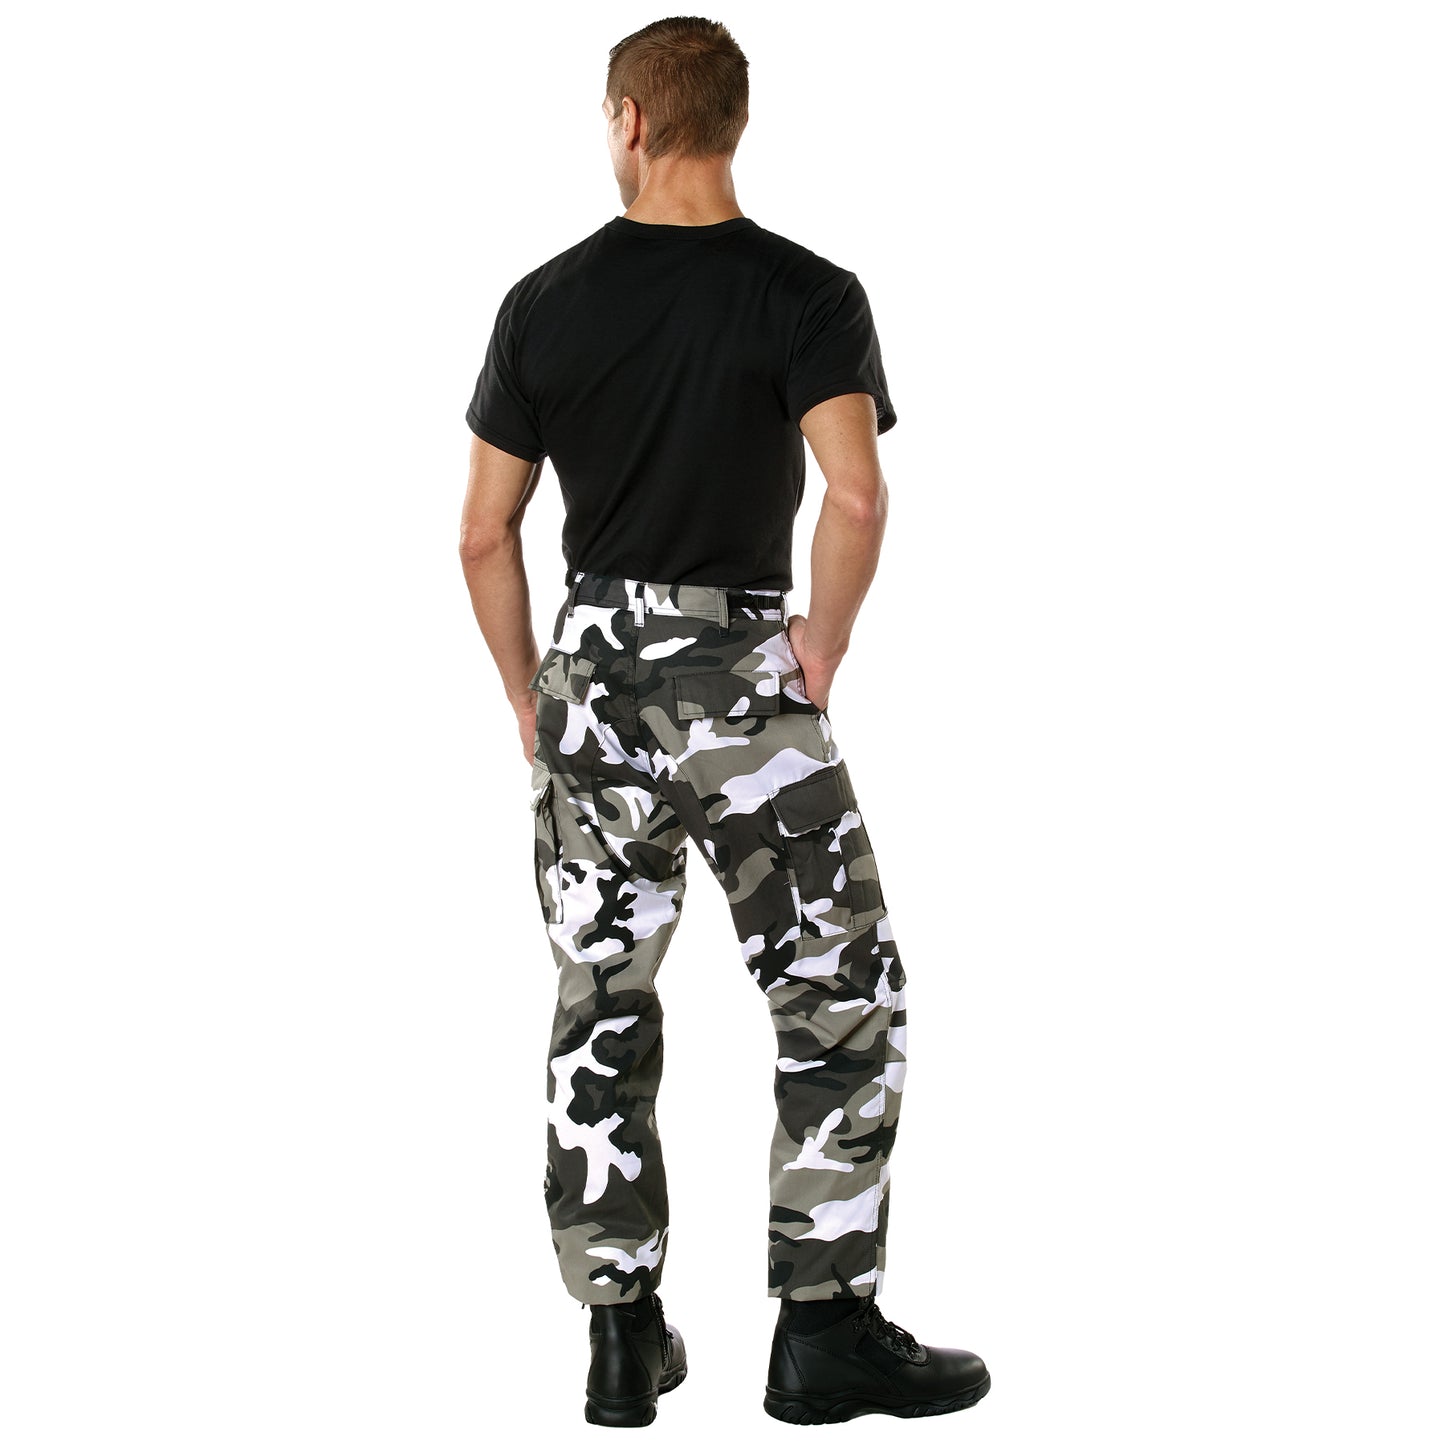 Rothco City Camo Tactical BDU Pants